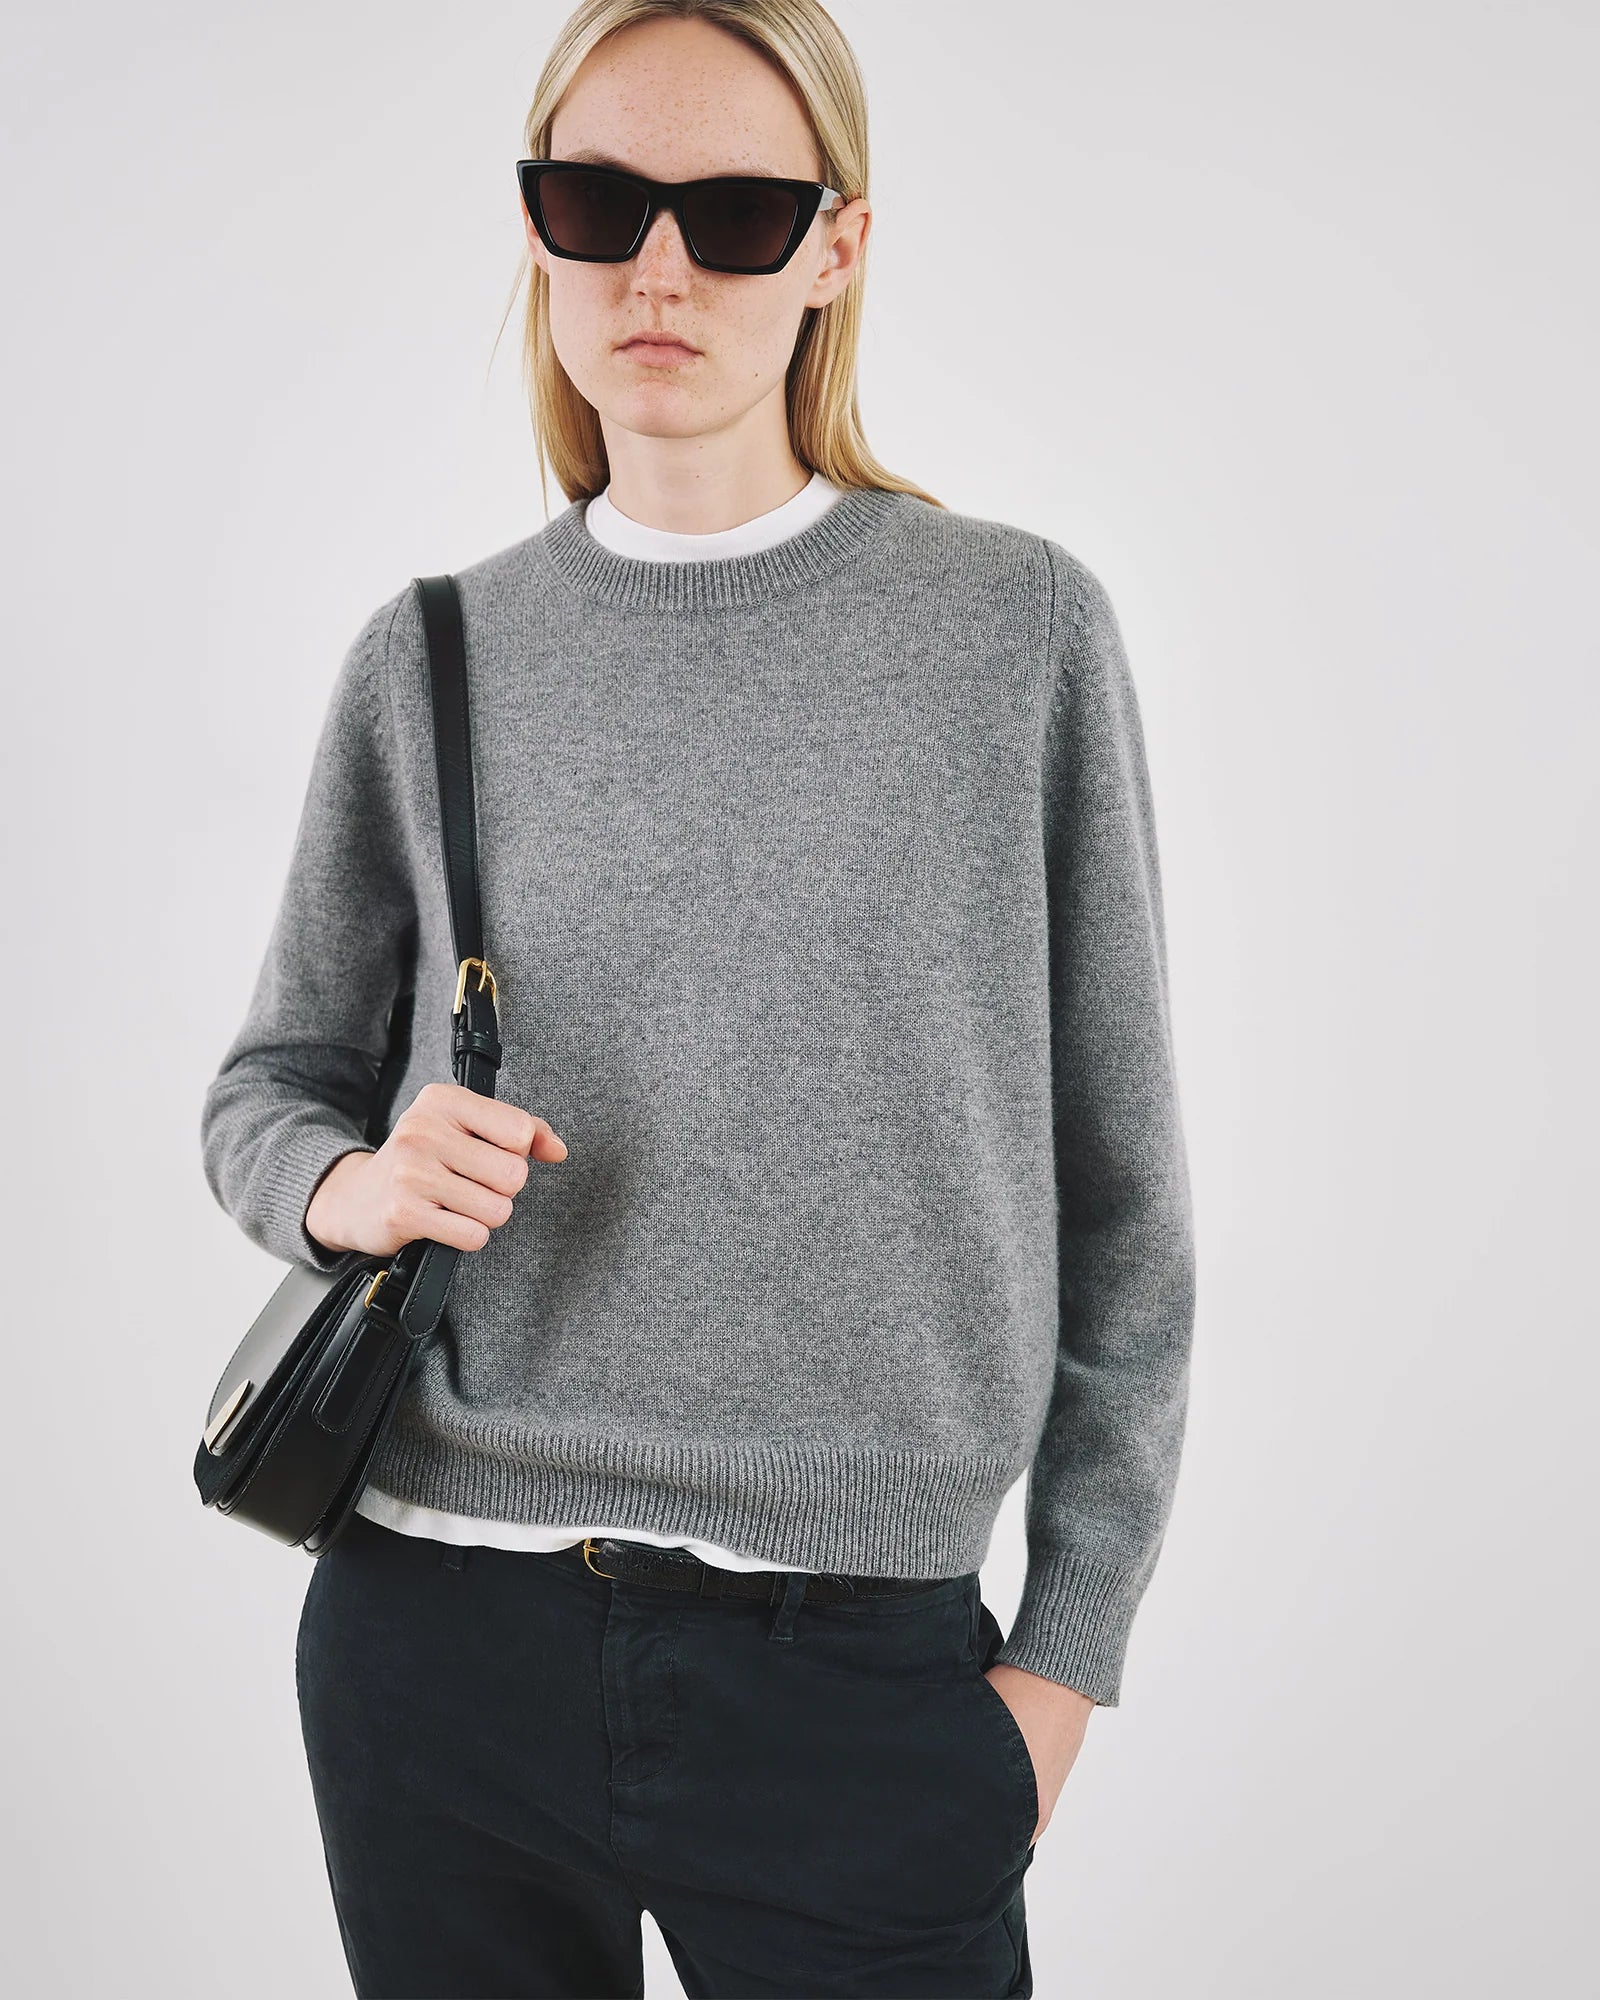 Nora Sweater in Medium Grey Melange